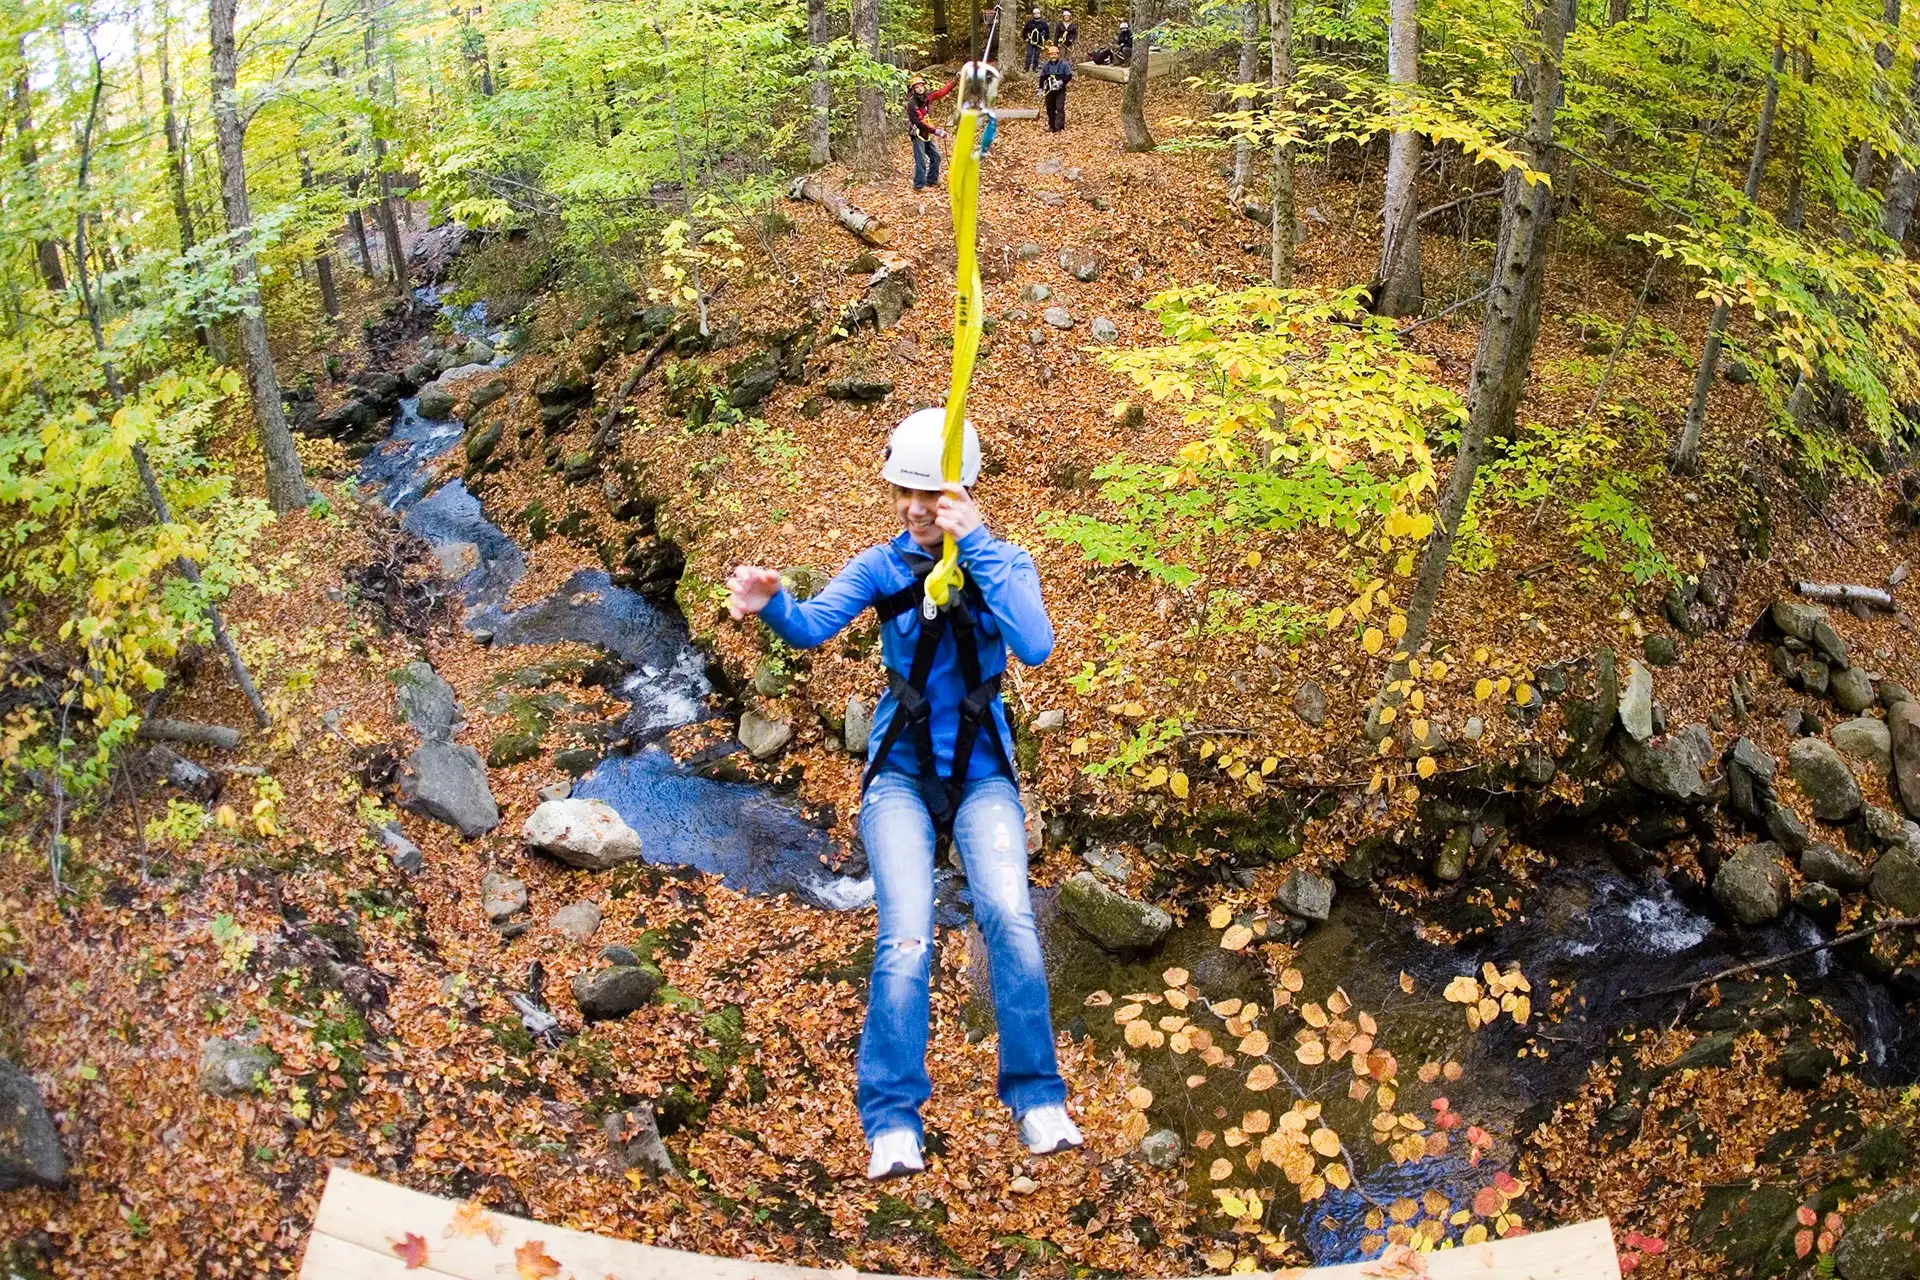 Ziplining at Sunday River Resort in Newry, Maine